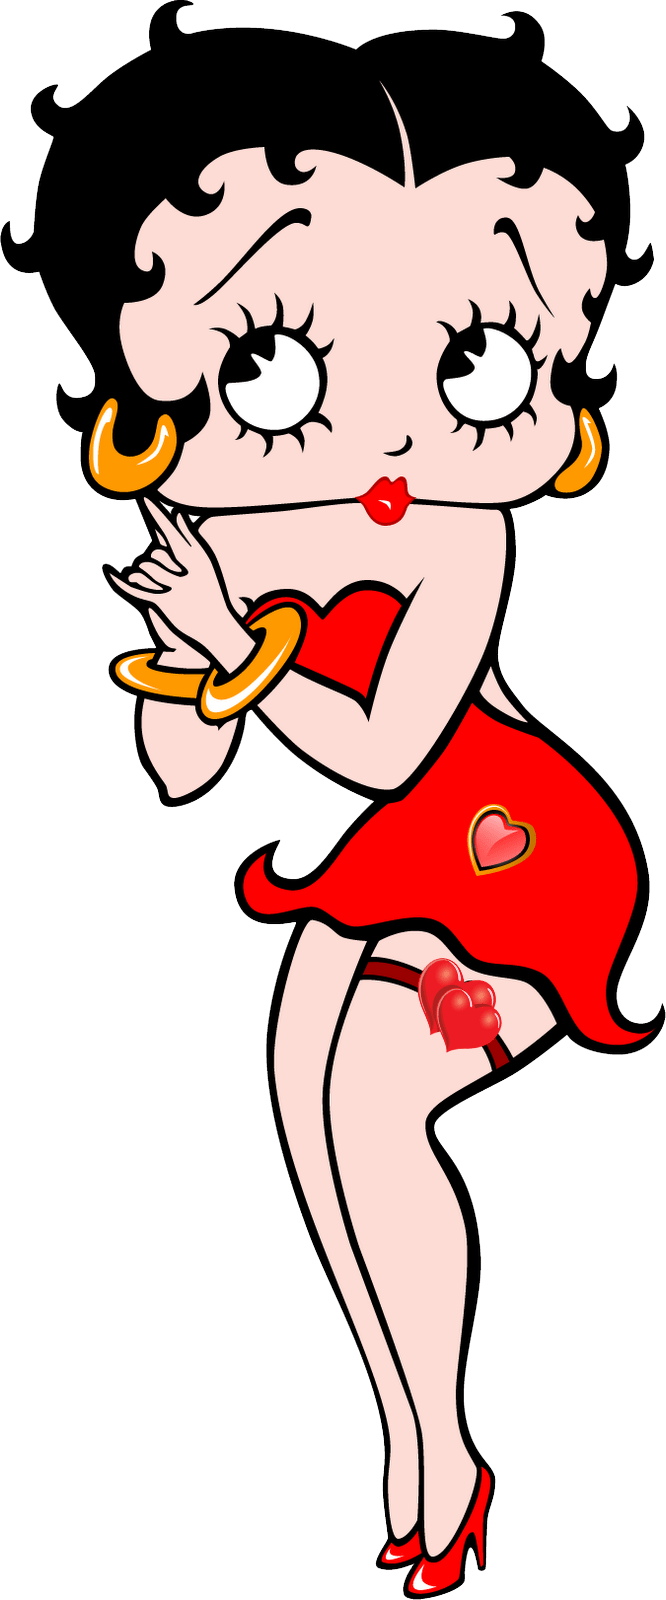 Betty Boop Cartoon PNG Transparant Beeld